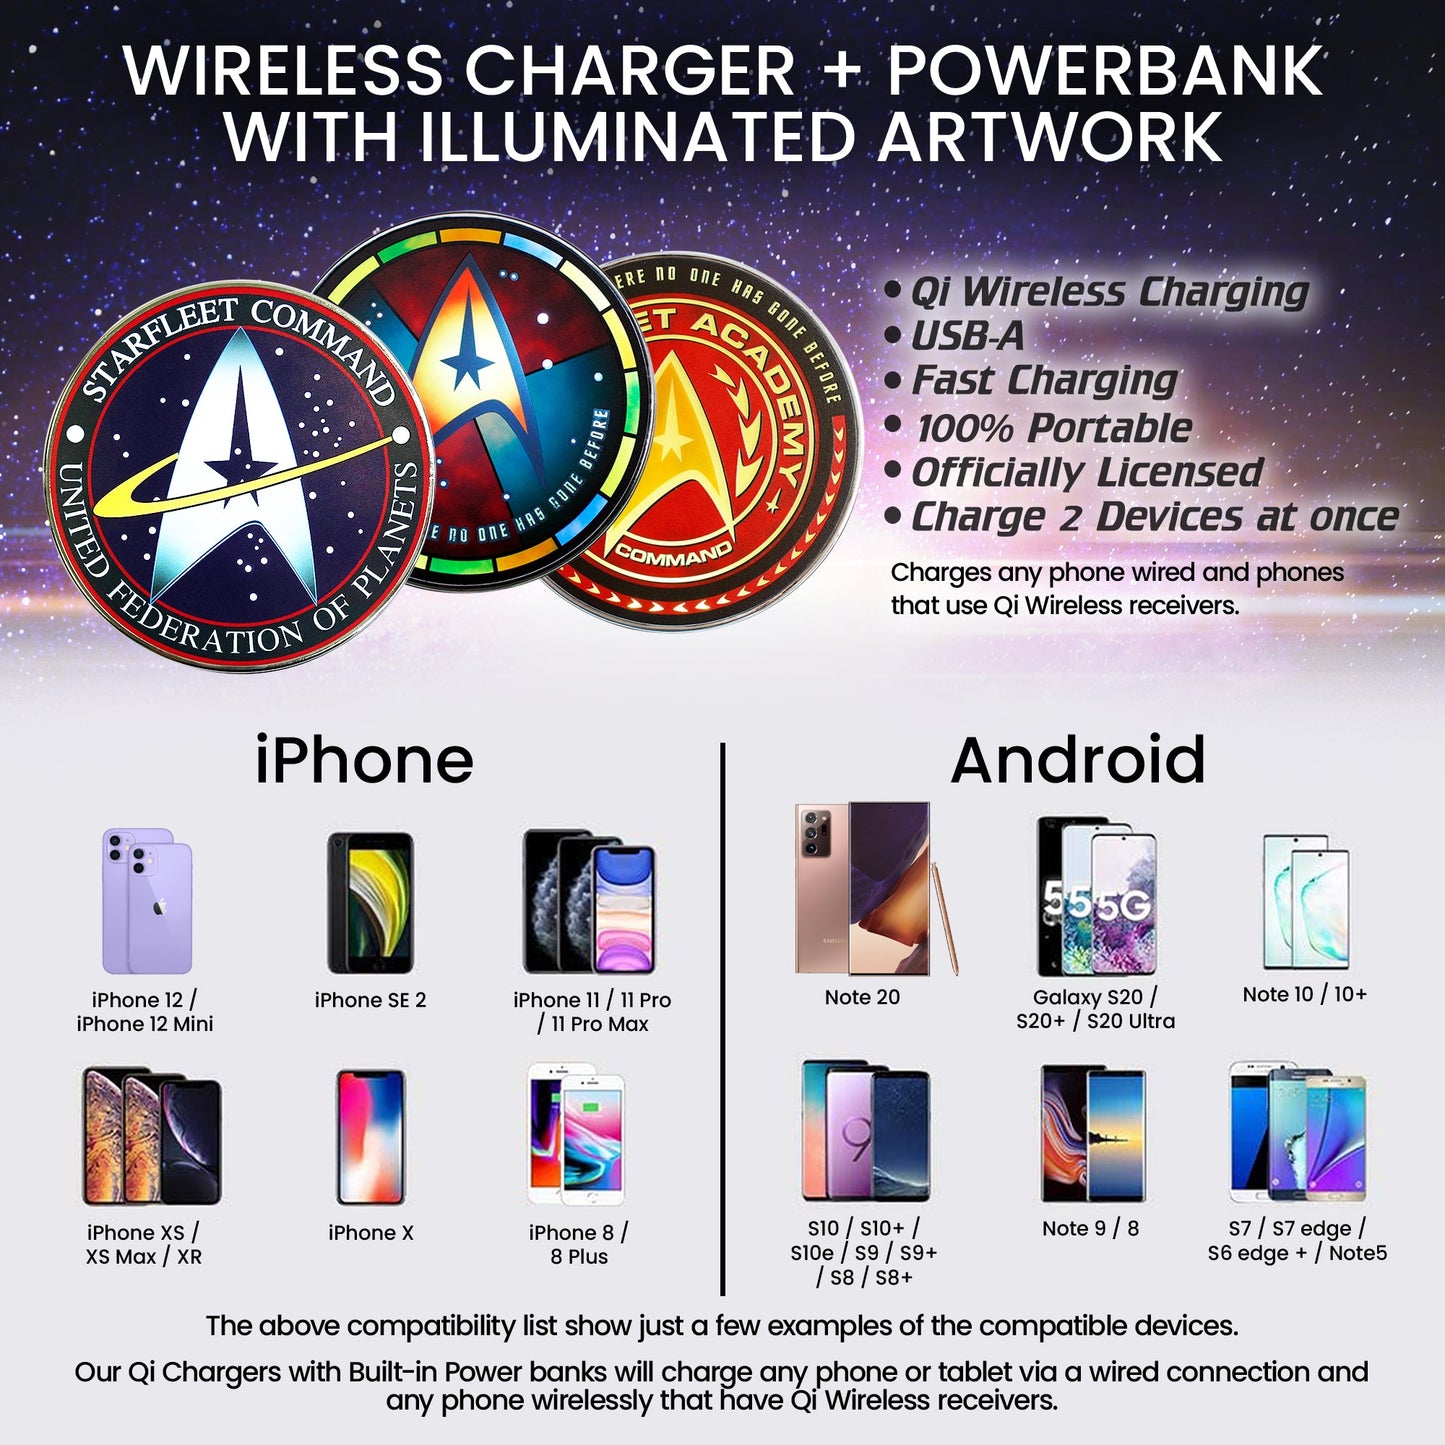 Star Trek Qi Wireless Charger - Paramount Shop